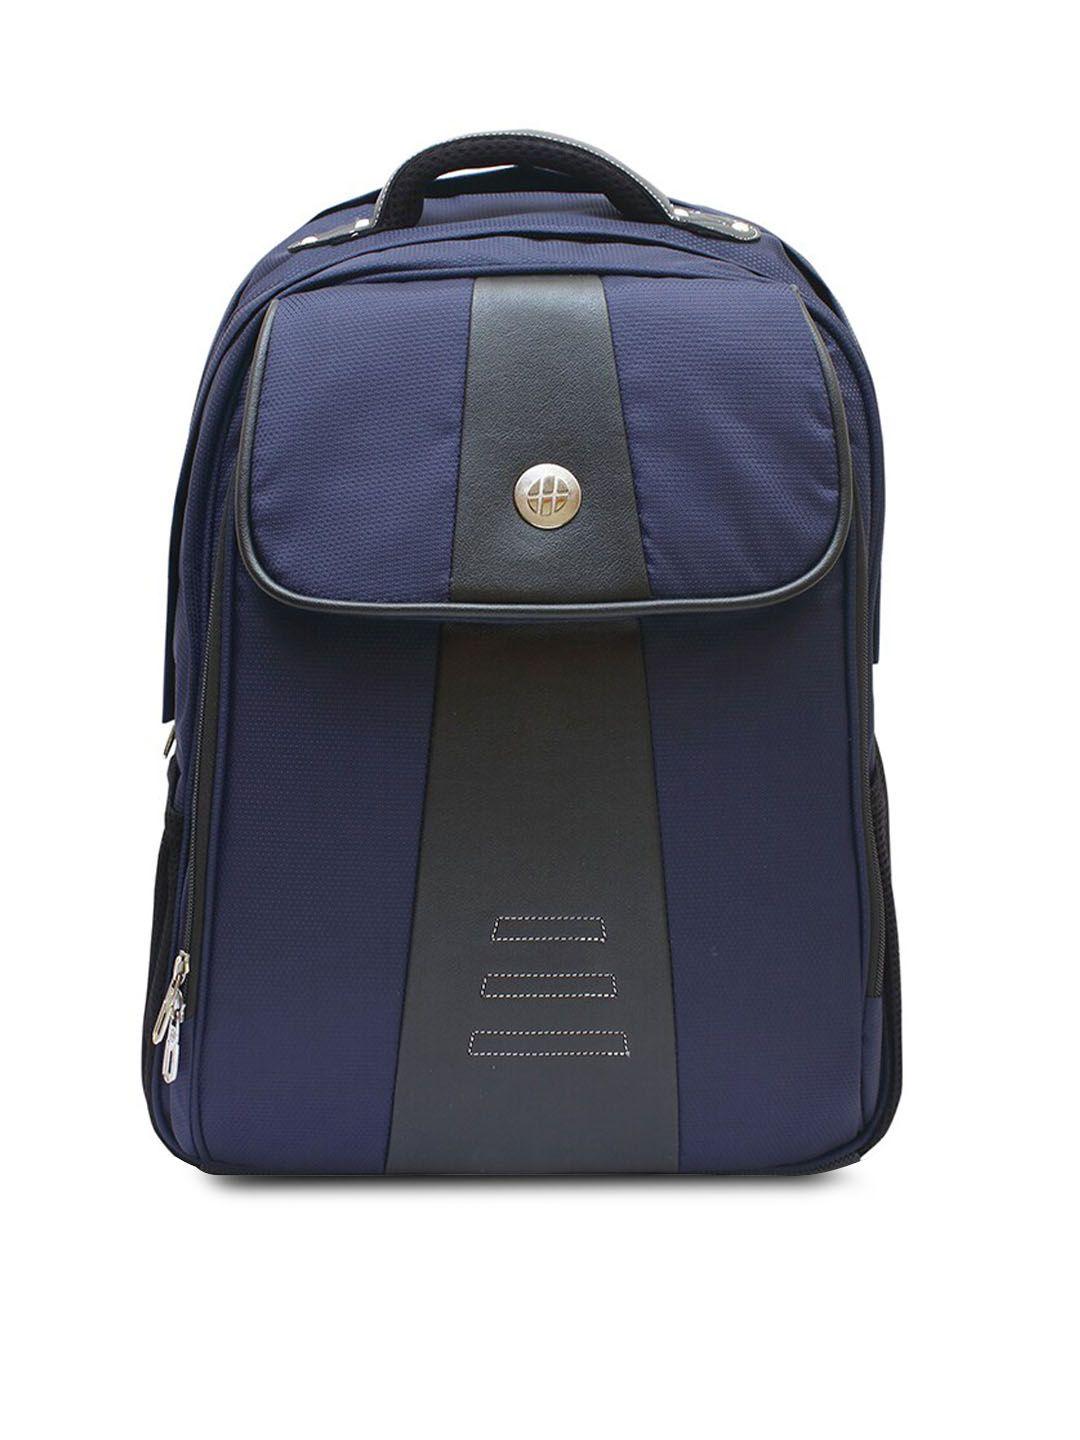 harissons navy blue & grey laptop backpack